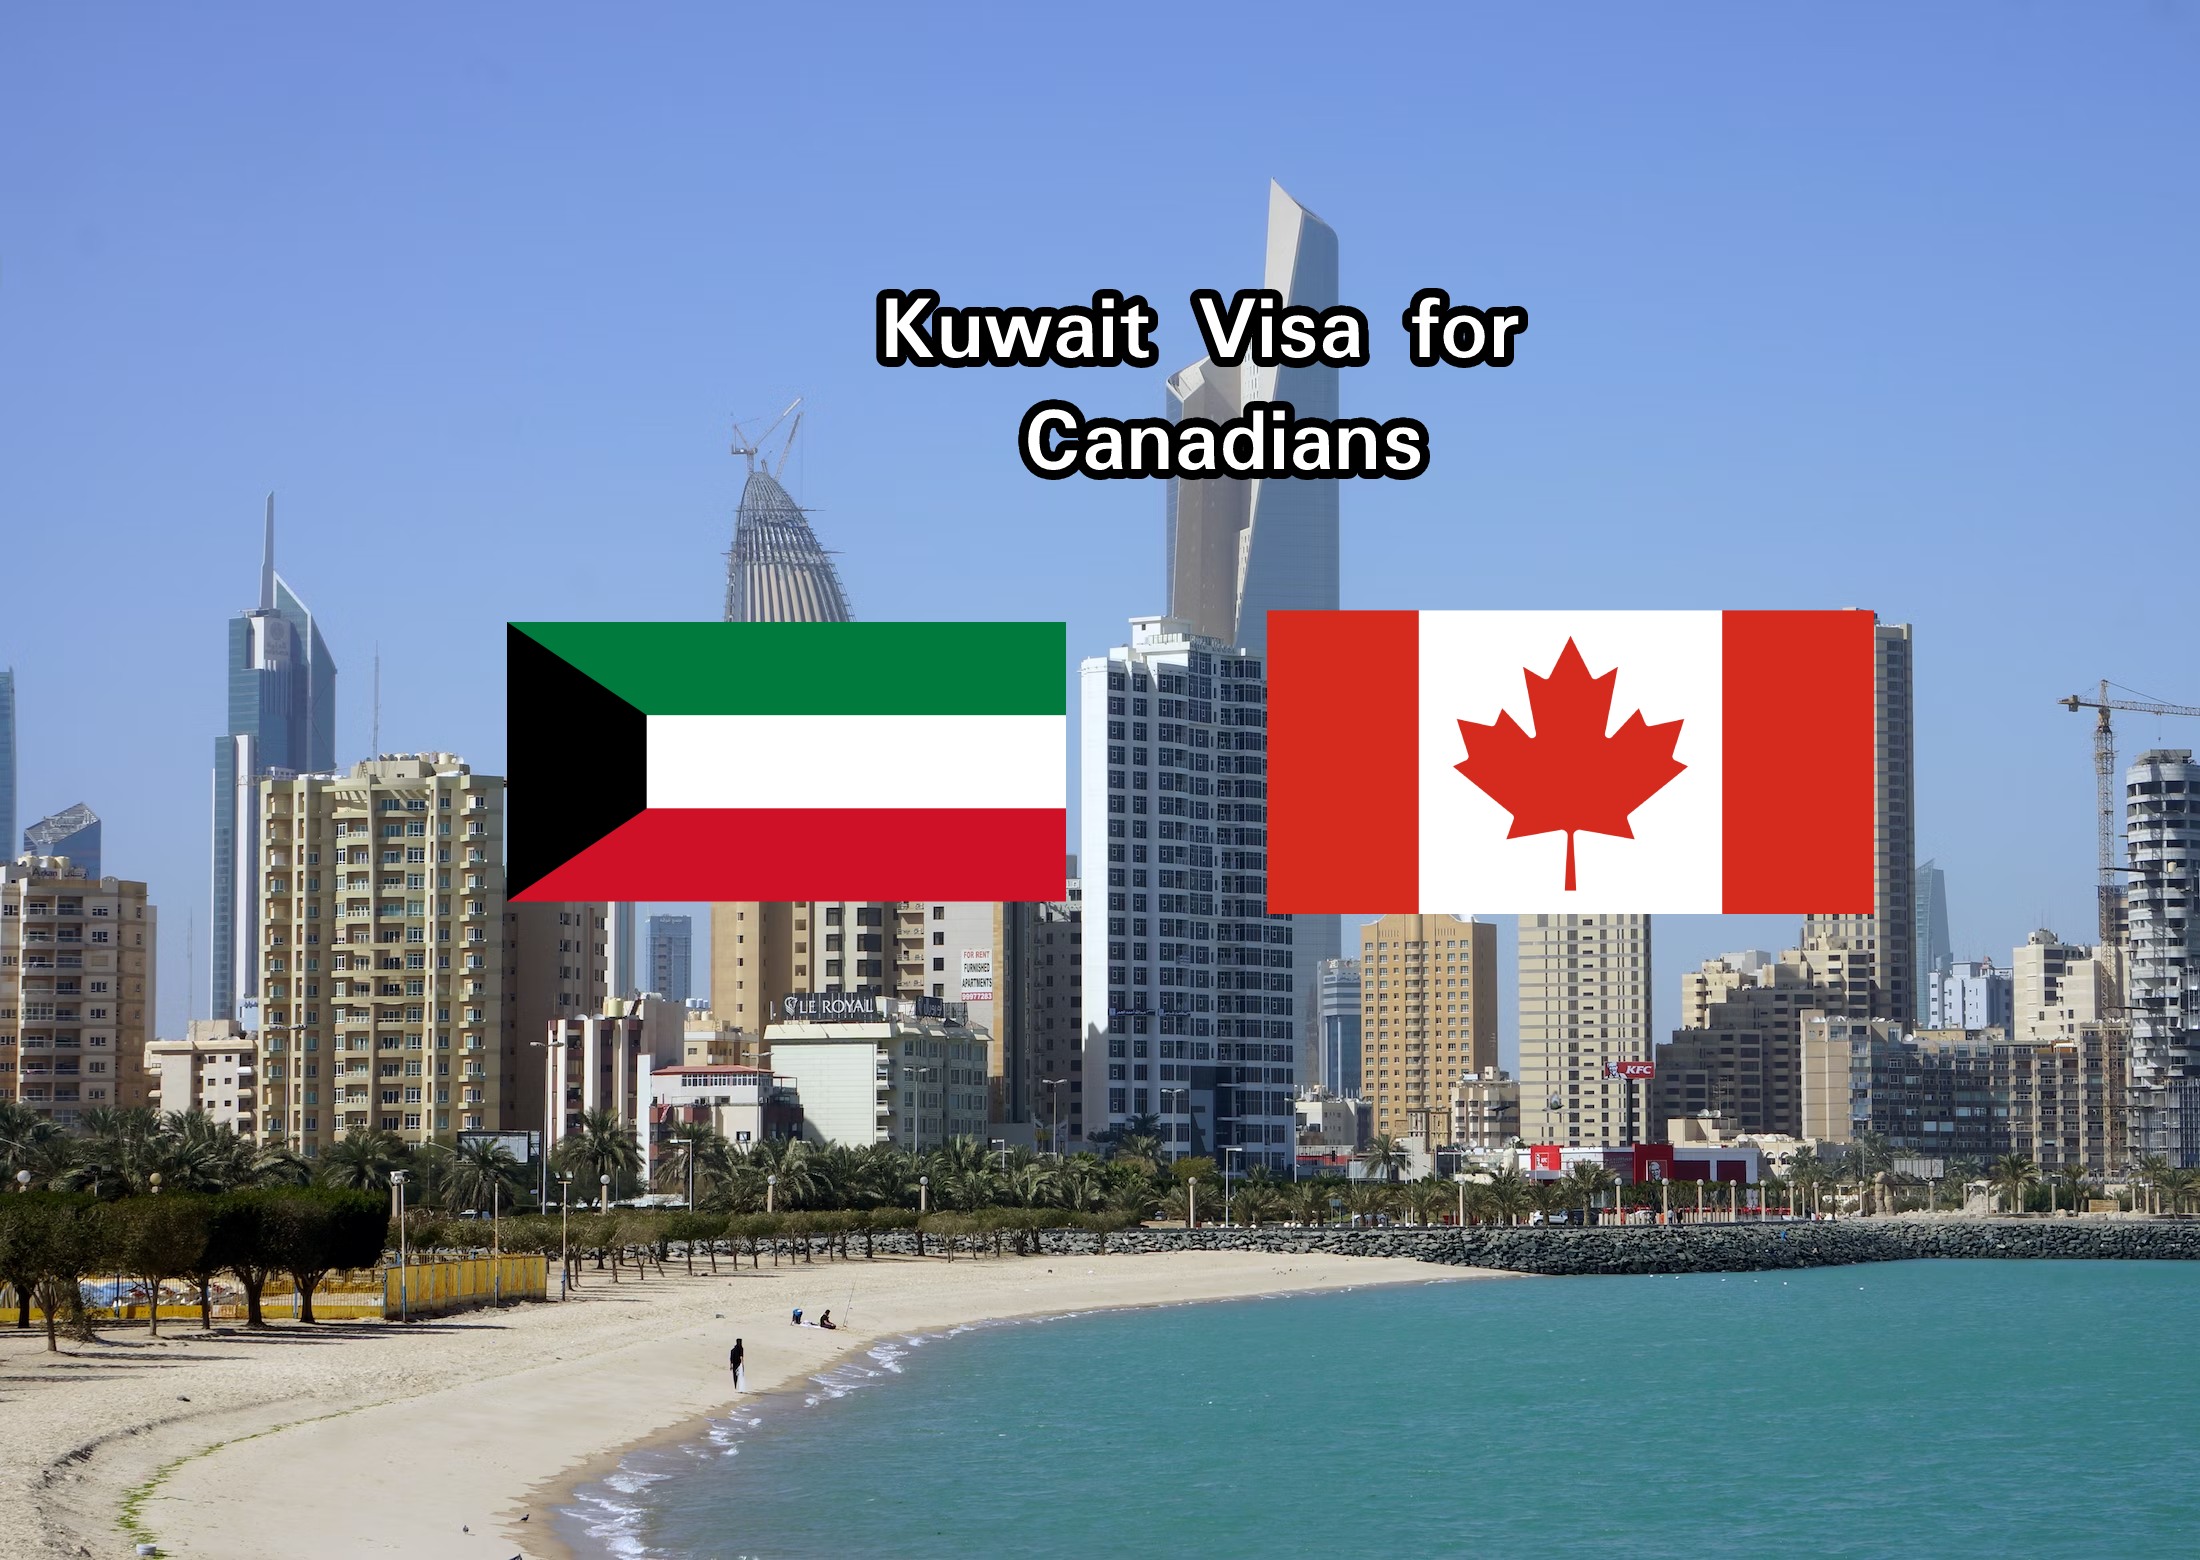 Kuwait Visa for Canadians